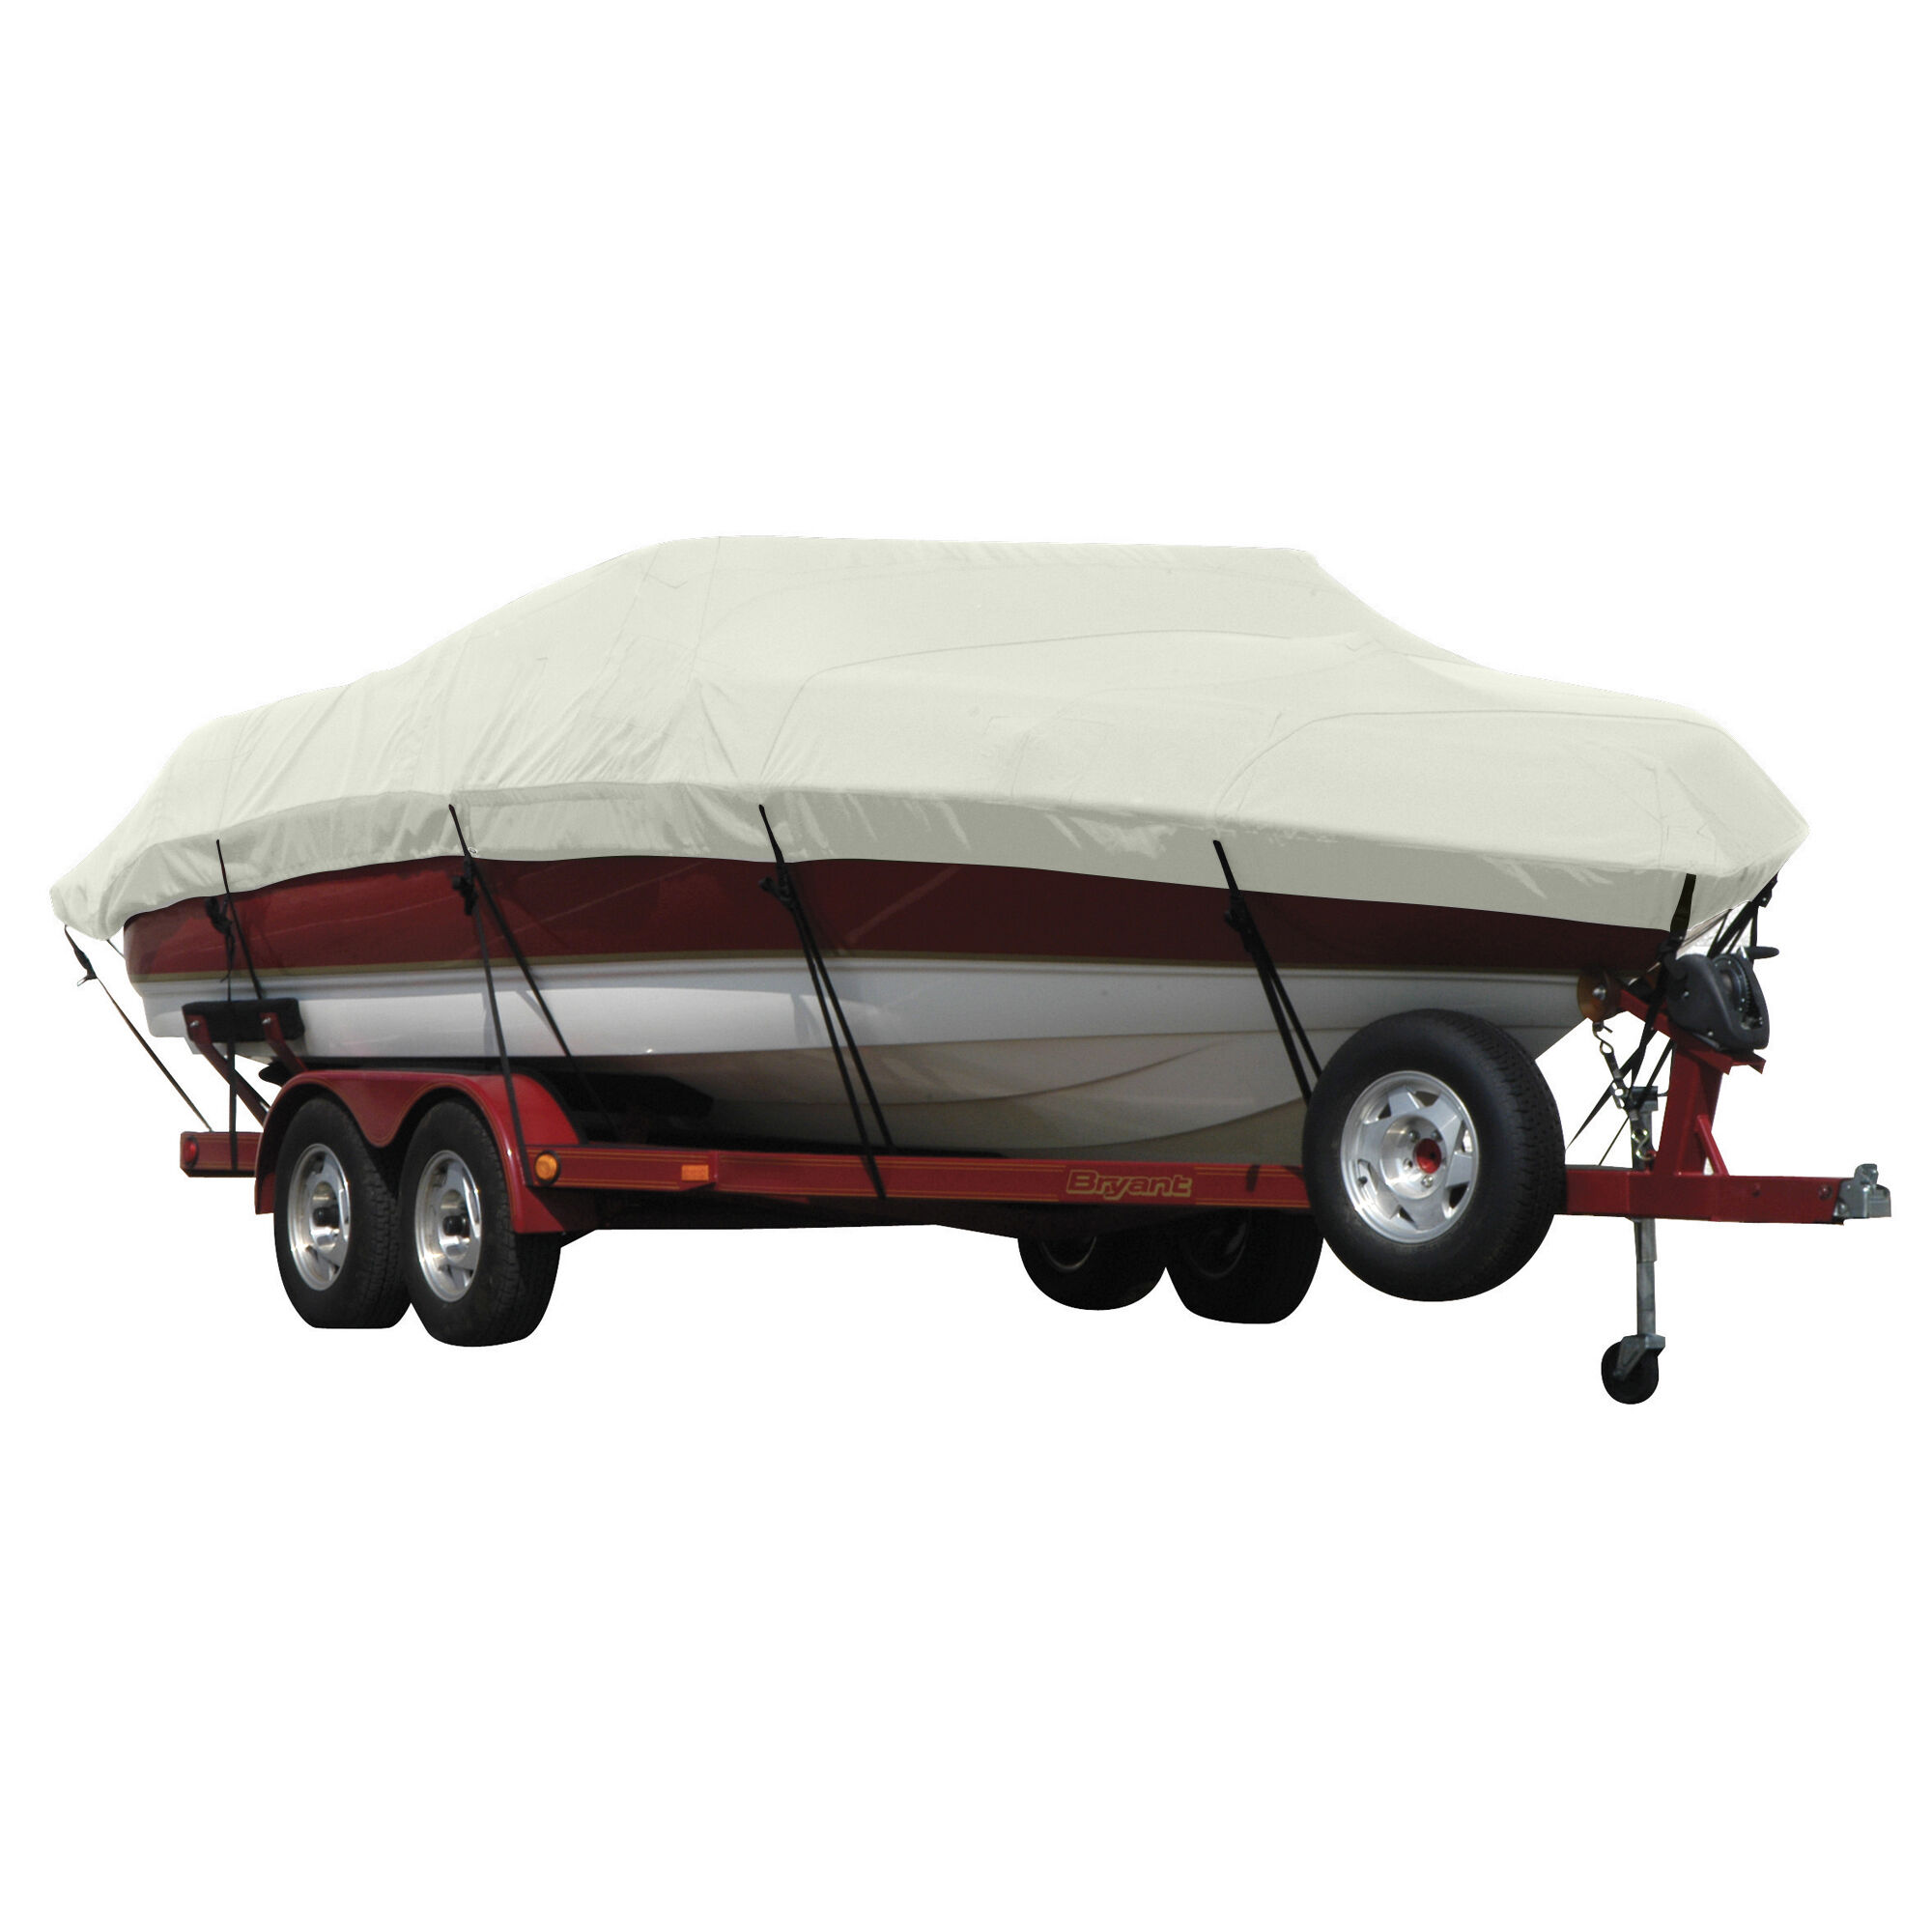 Covermate Sunbrella Exact-Fit Boat Cover - Sea Ray 180 Bowrider I